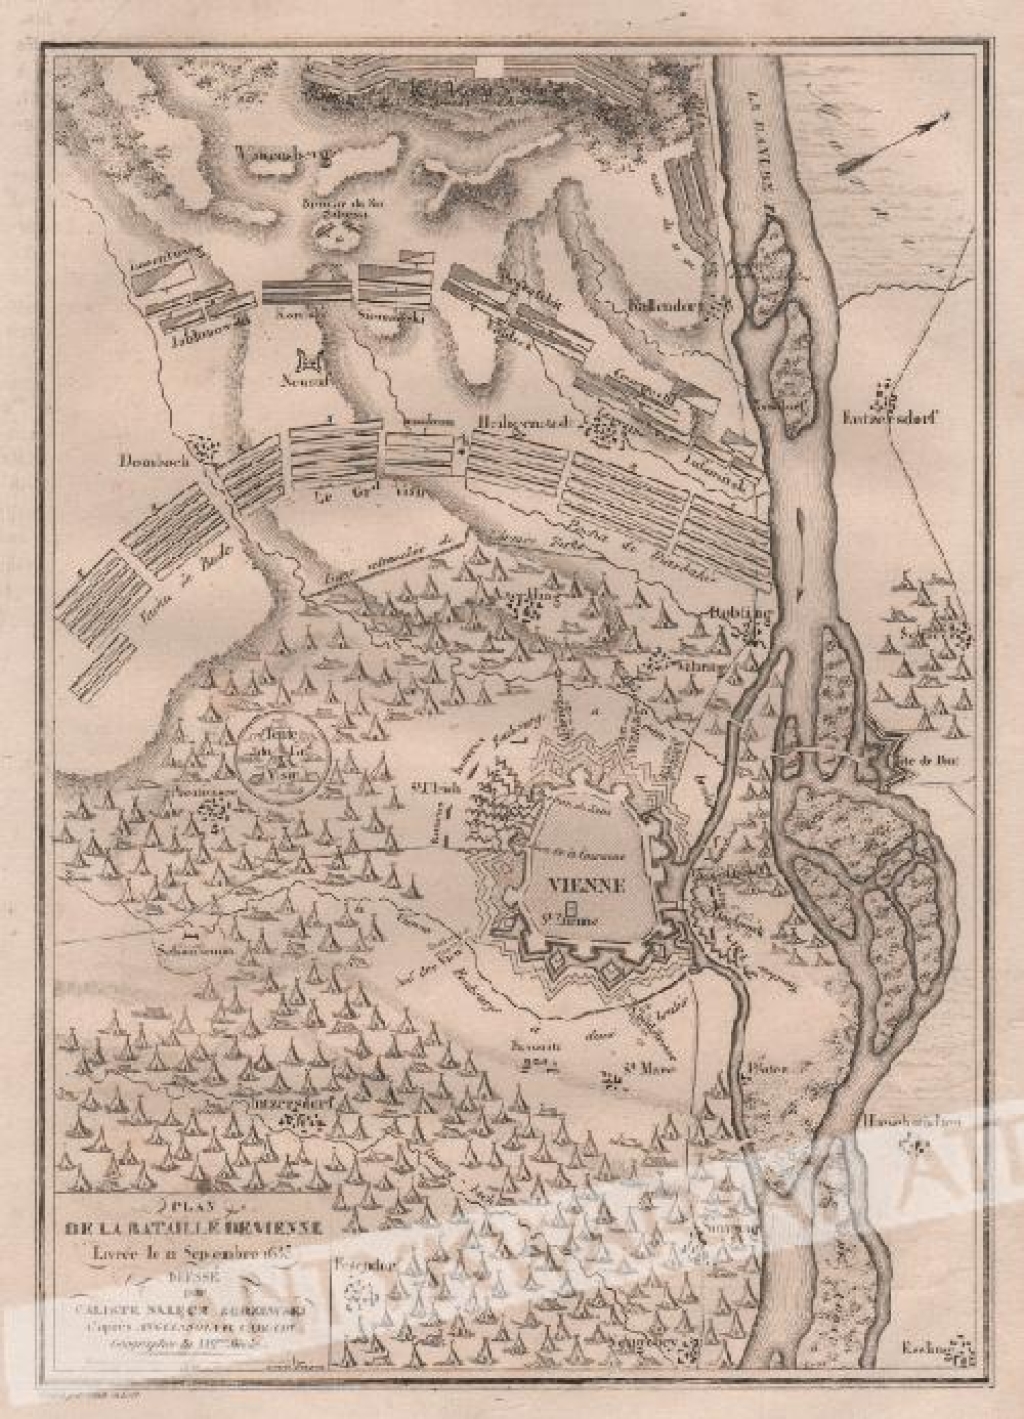 [mapa, XIX w.] Plan de la Bataille de Vienne. Livree le 12 Septembre 1683 [Plan Bitwy pod Wiedniem 12 września 1683] 